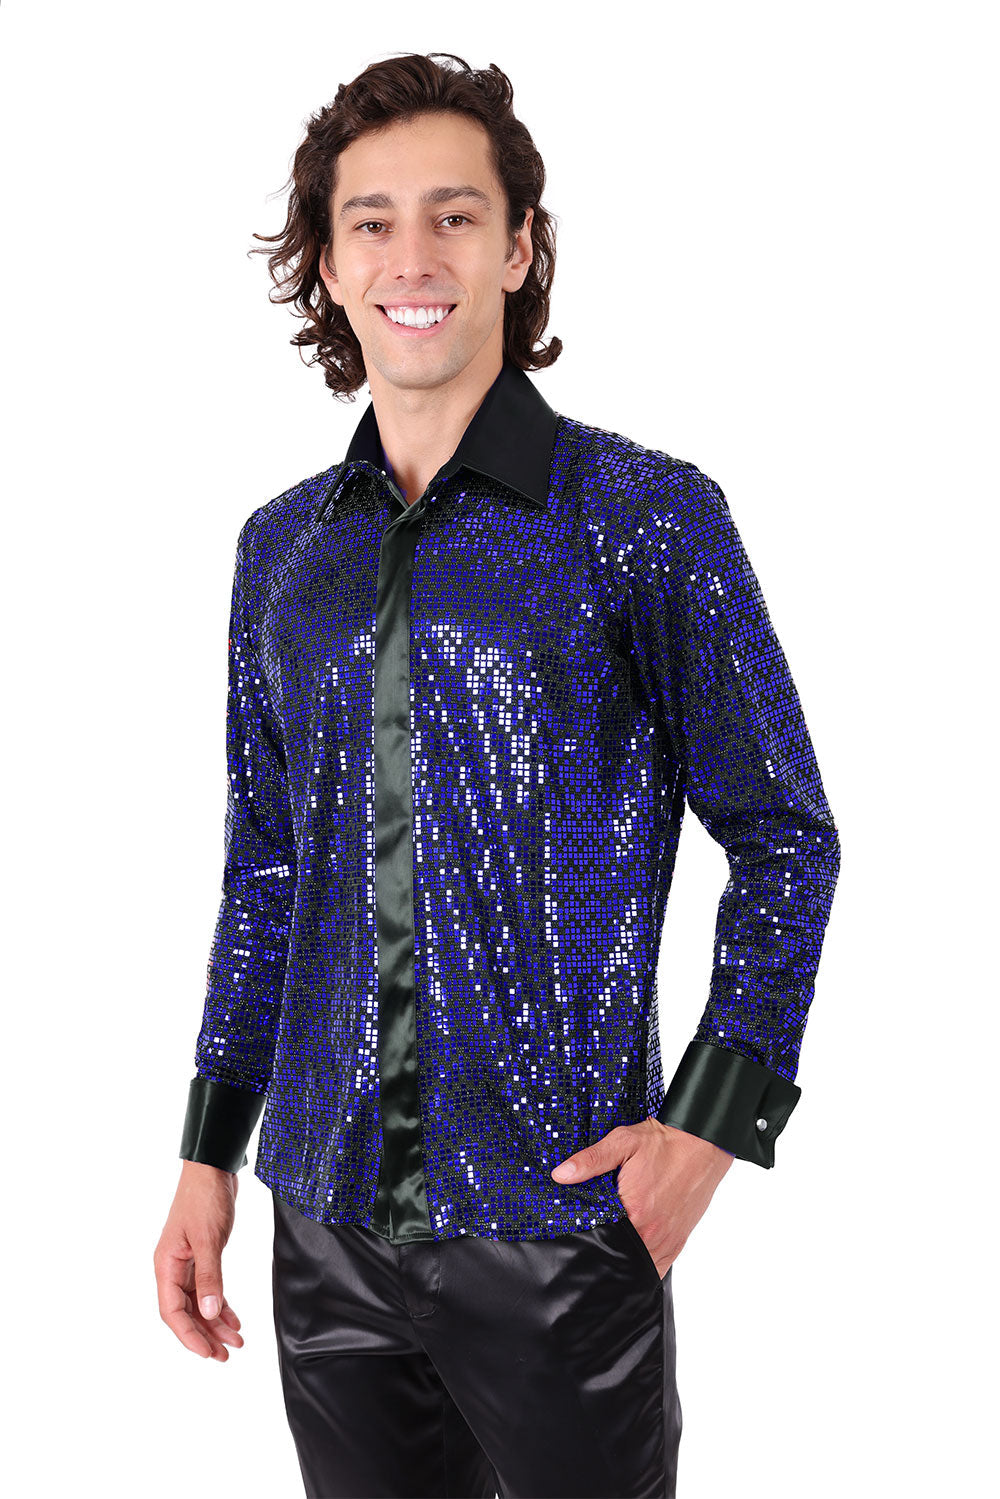 Barabas Men's French Cuff Glittery Sparkly Striped Shirt 2FCS1006 Roya